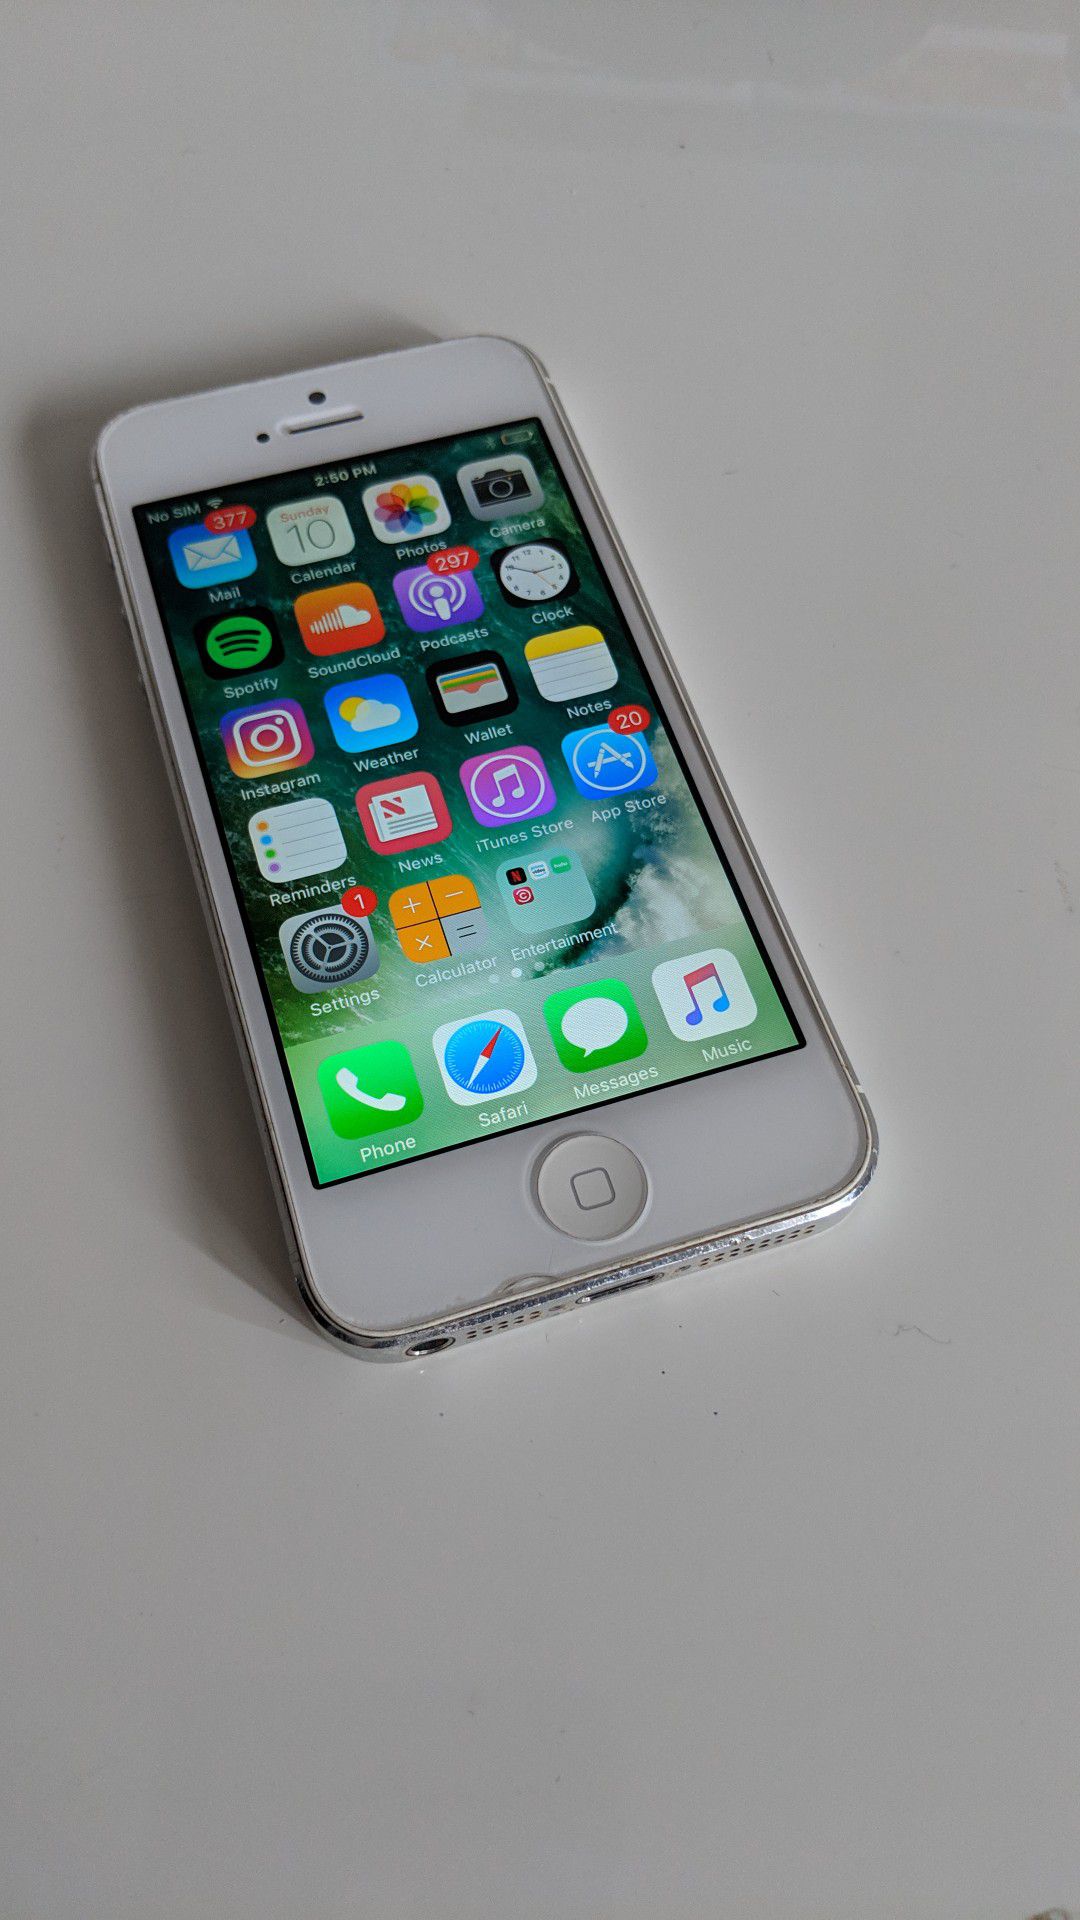 Apple iPhone 5 - Verizon 32gb - Unlocked